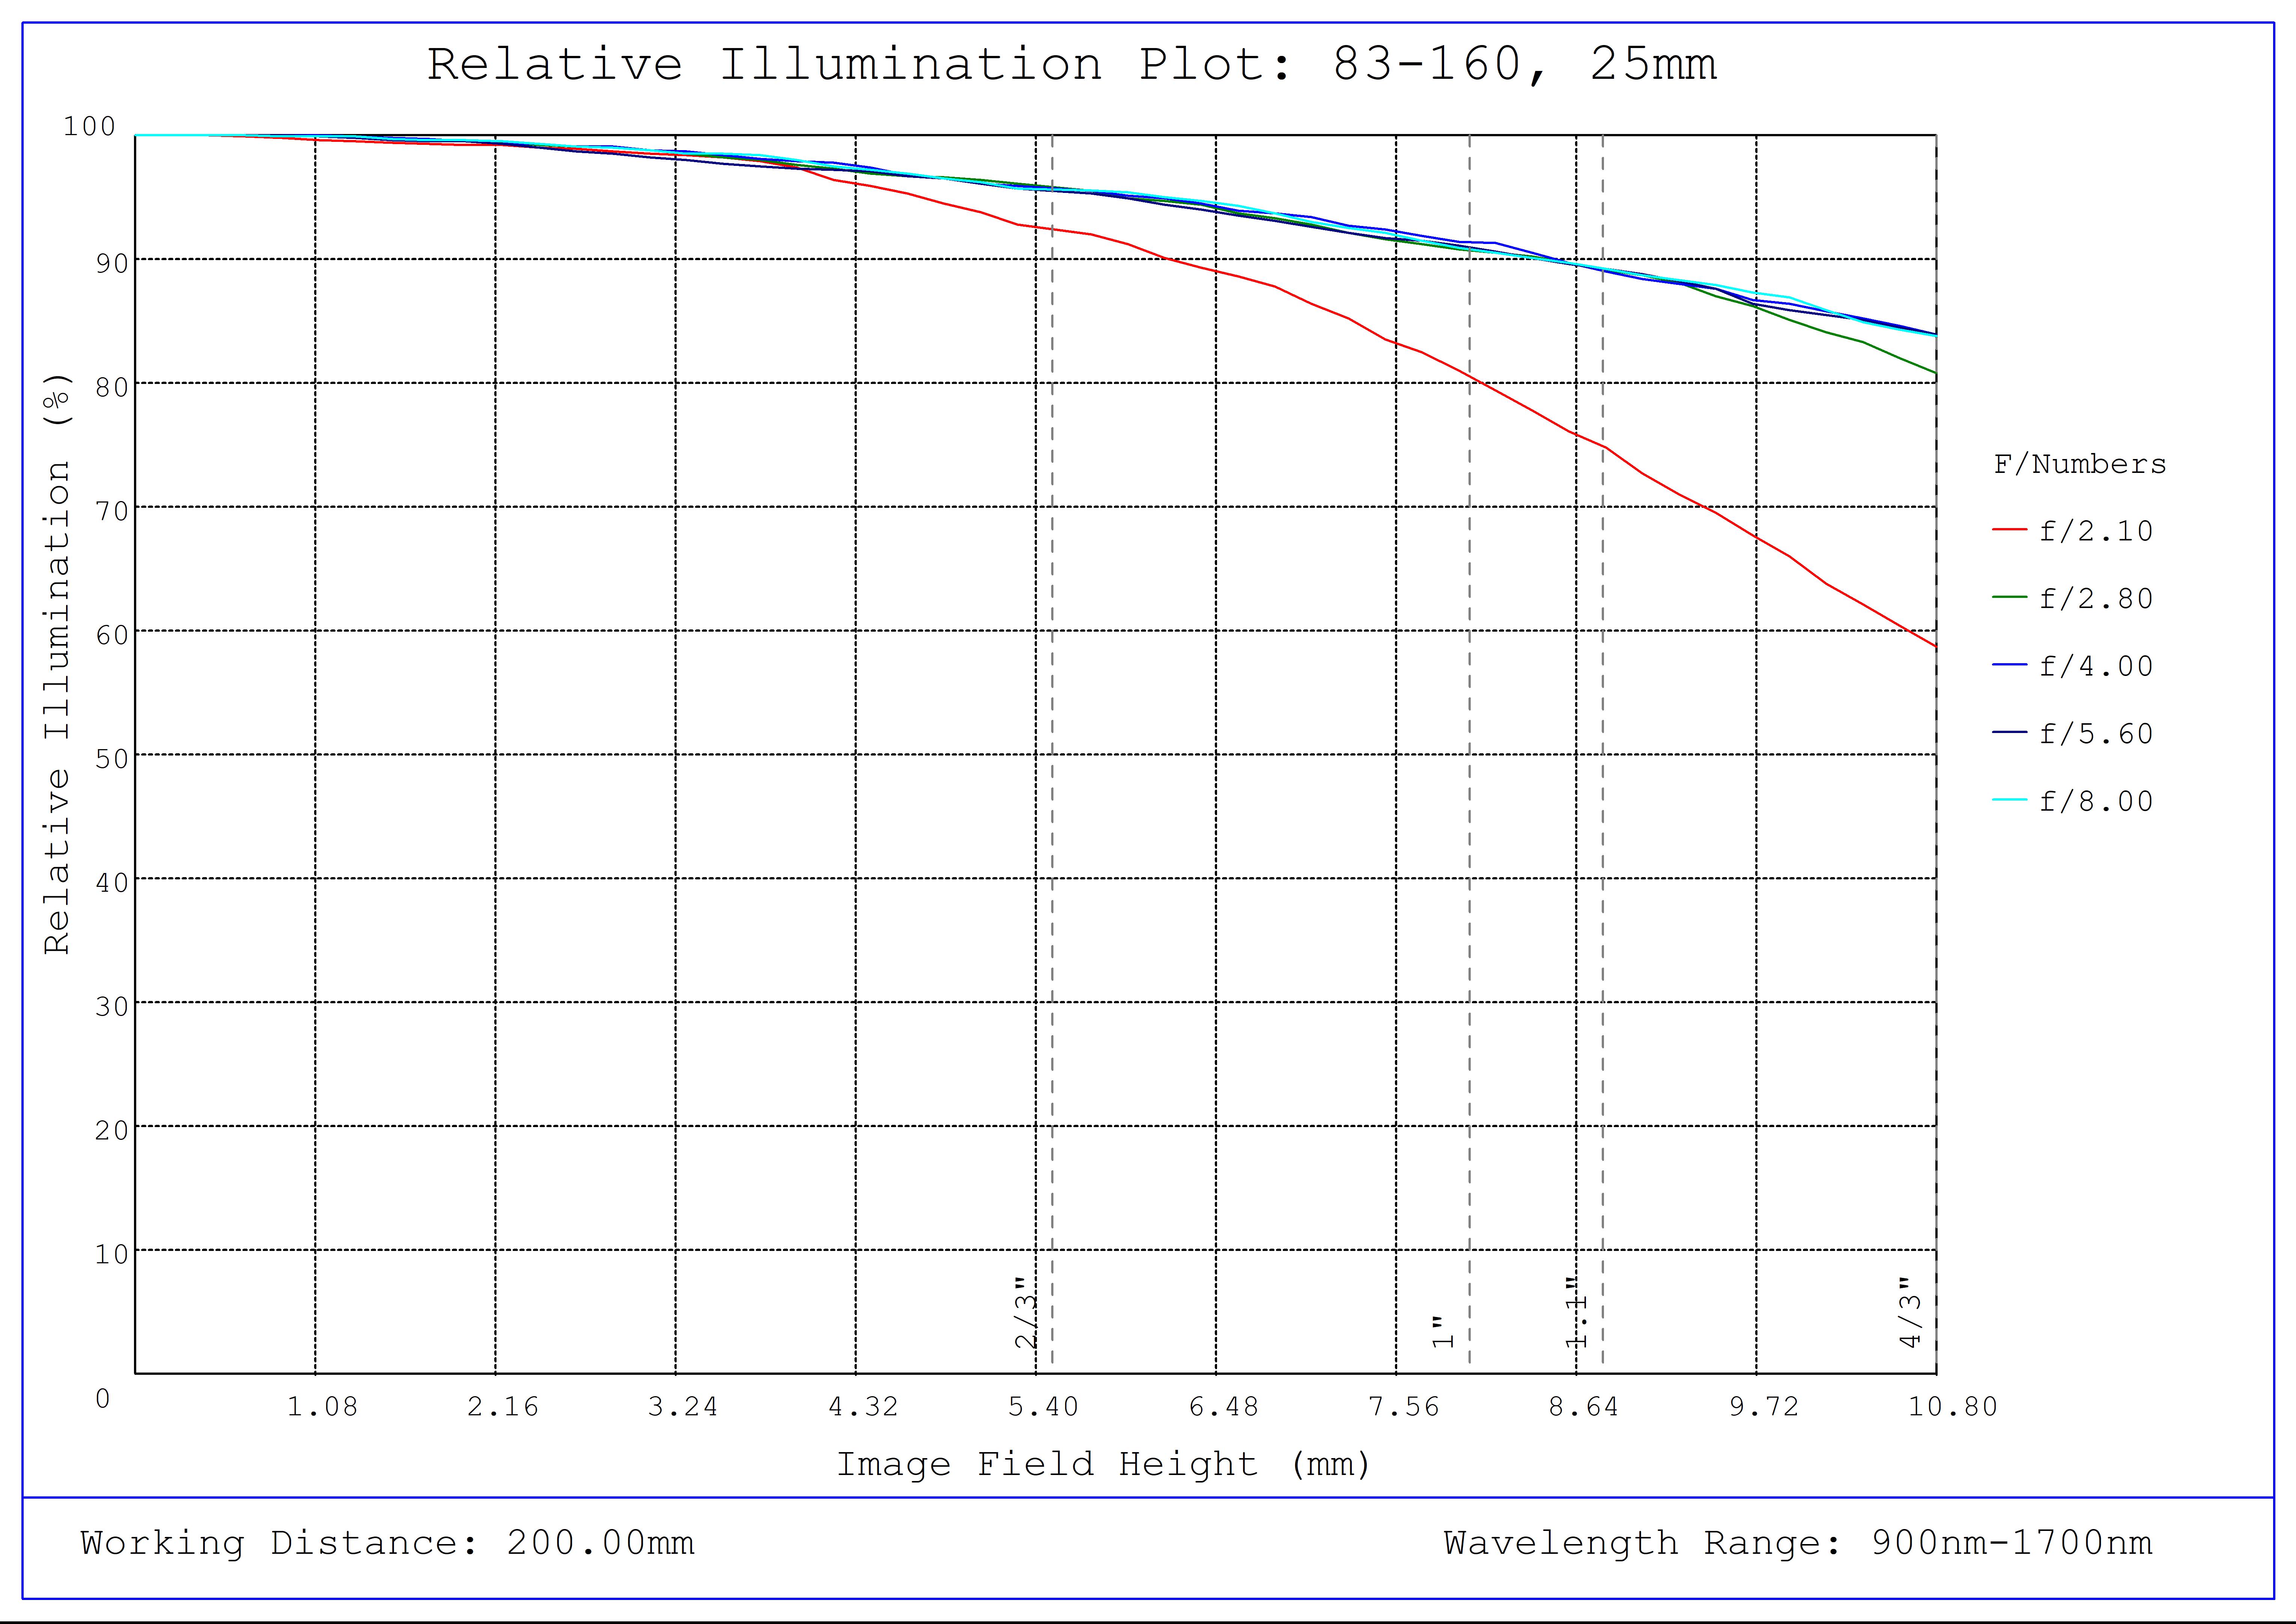 #83-160, 25mm SWIR Series Fixed Focal Length Lens, Relative Illumination Plot